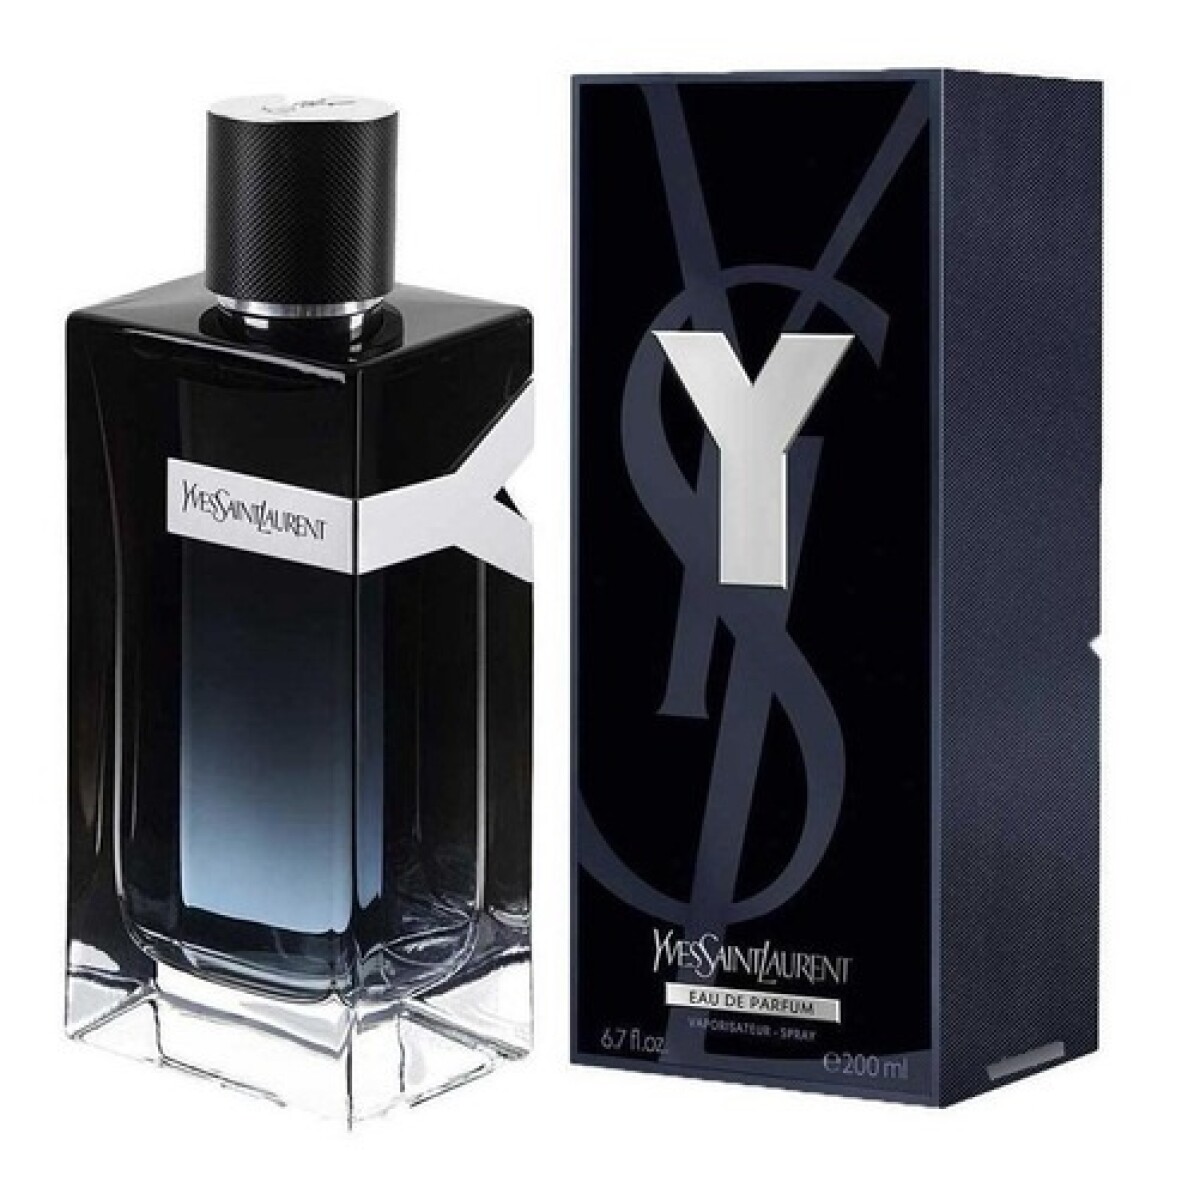 Perfume Ysl Y Men Edp 200ml. 